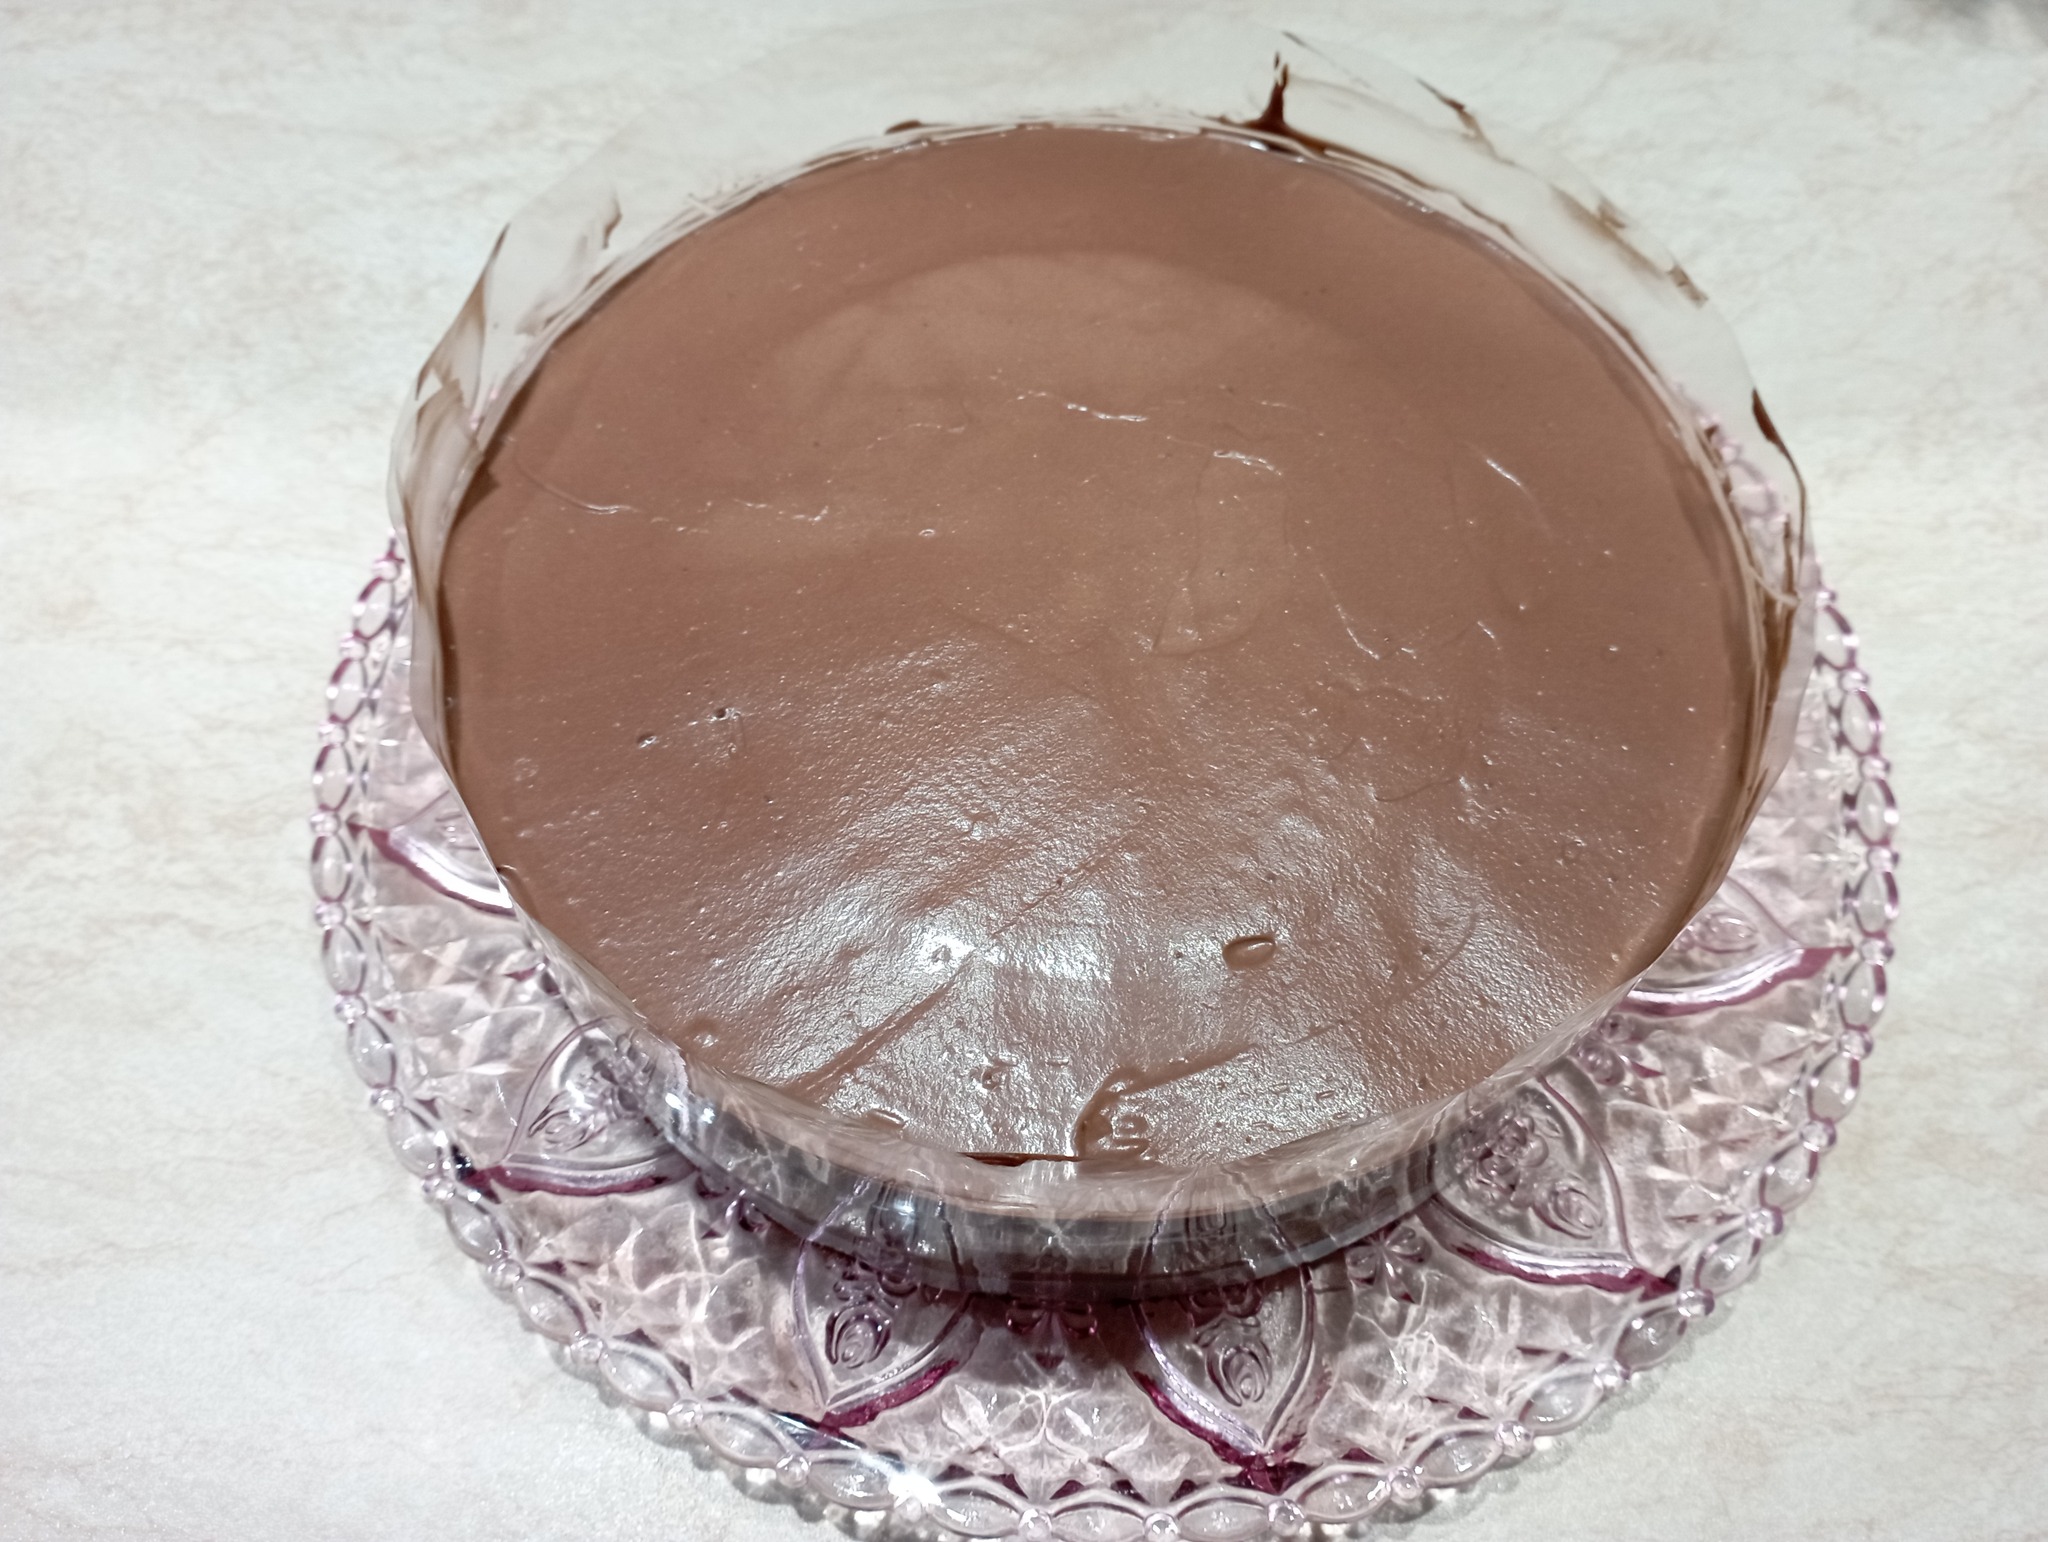 Reteta de tort cu zmeura si ciocolata